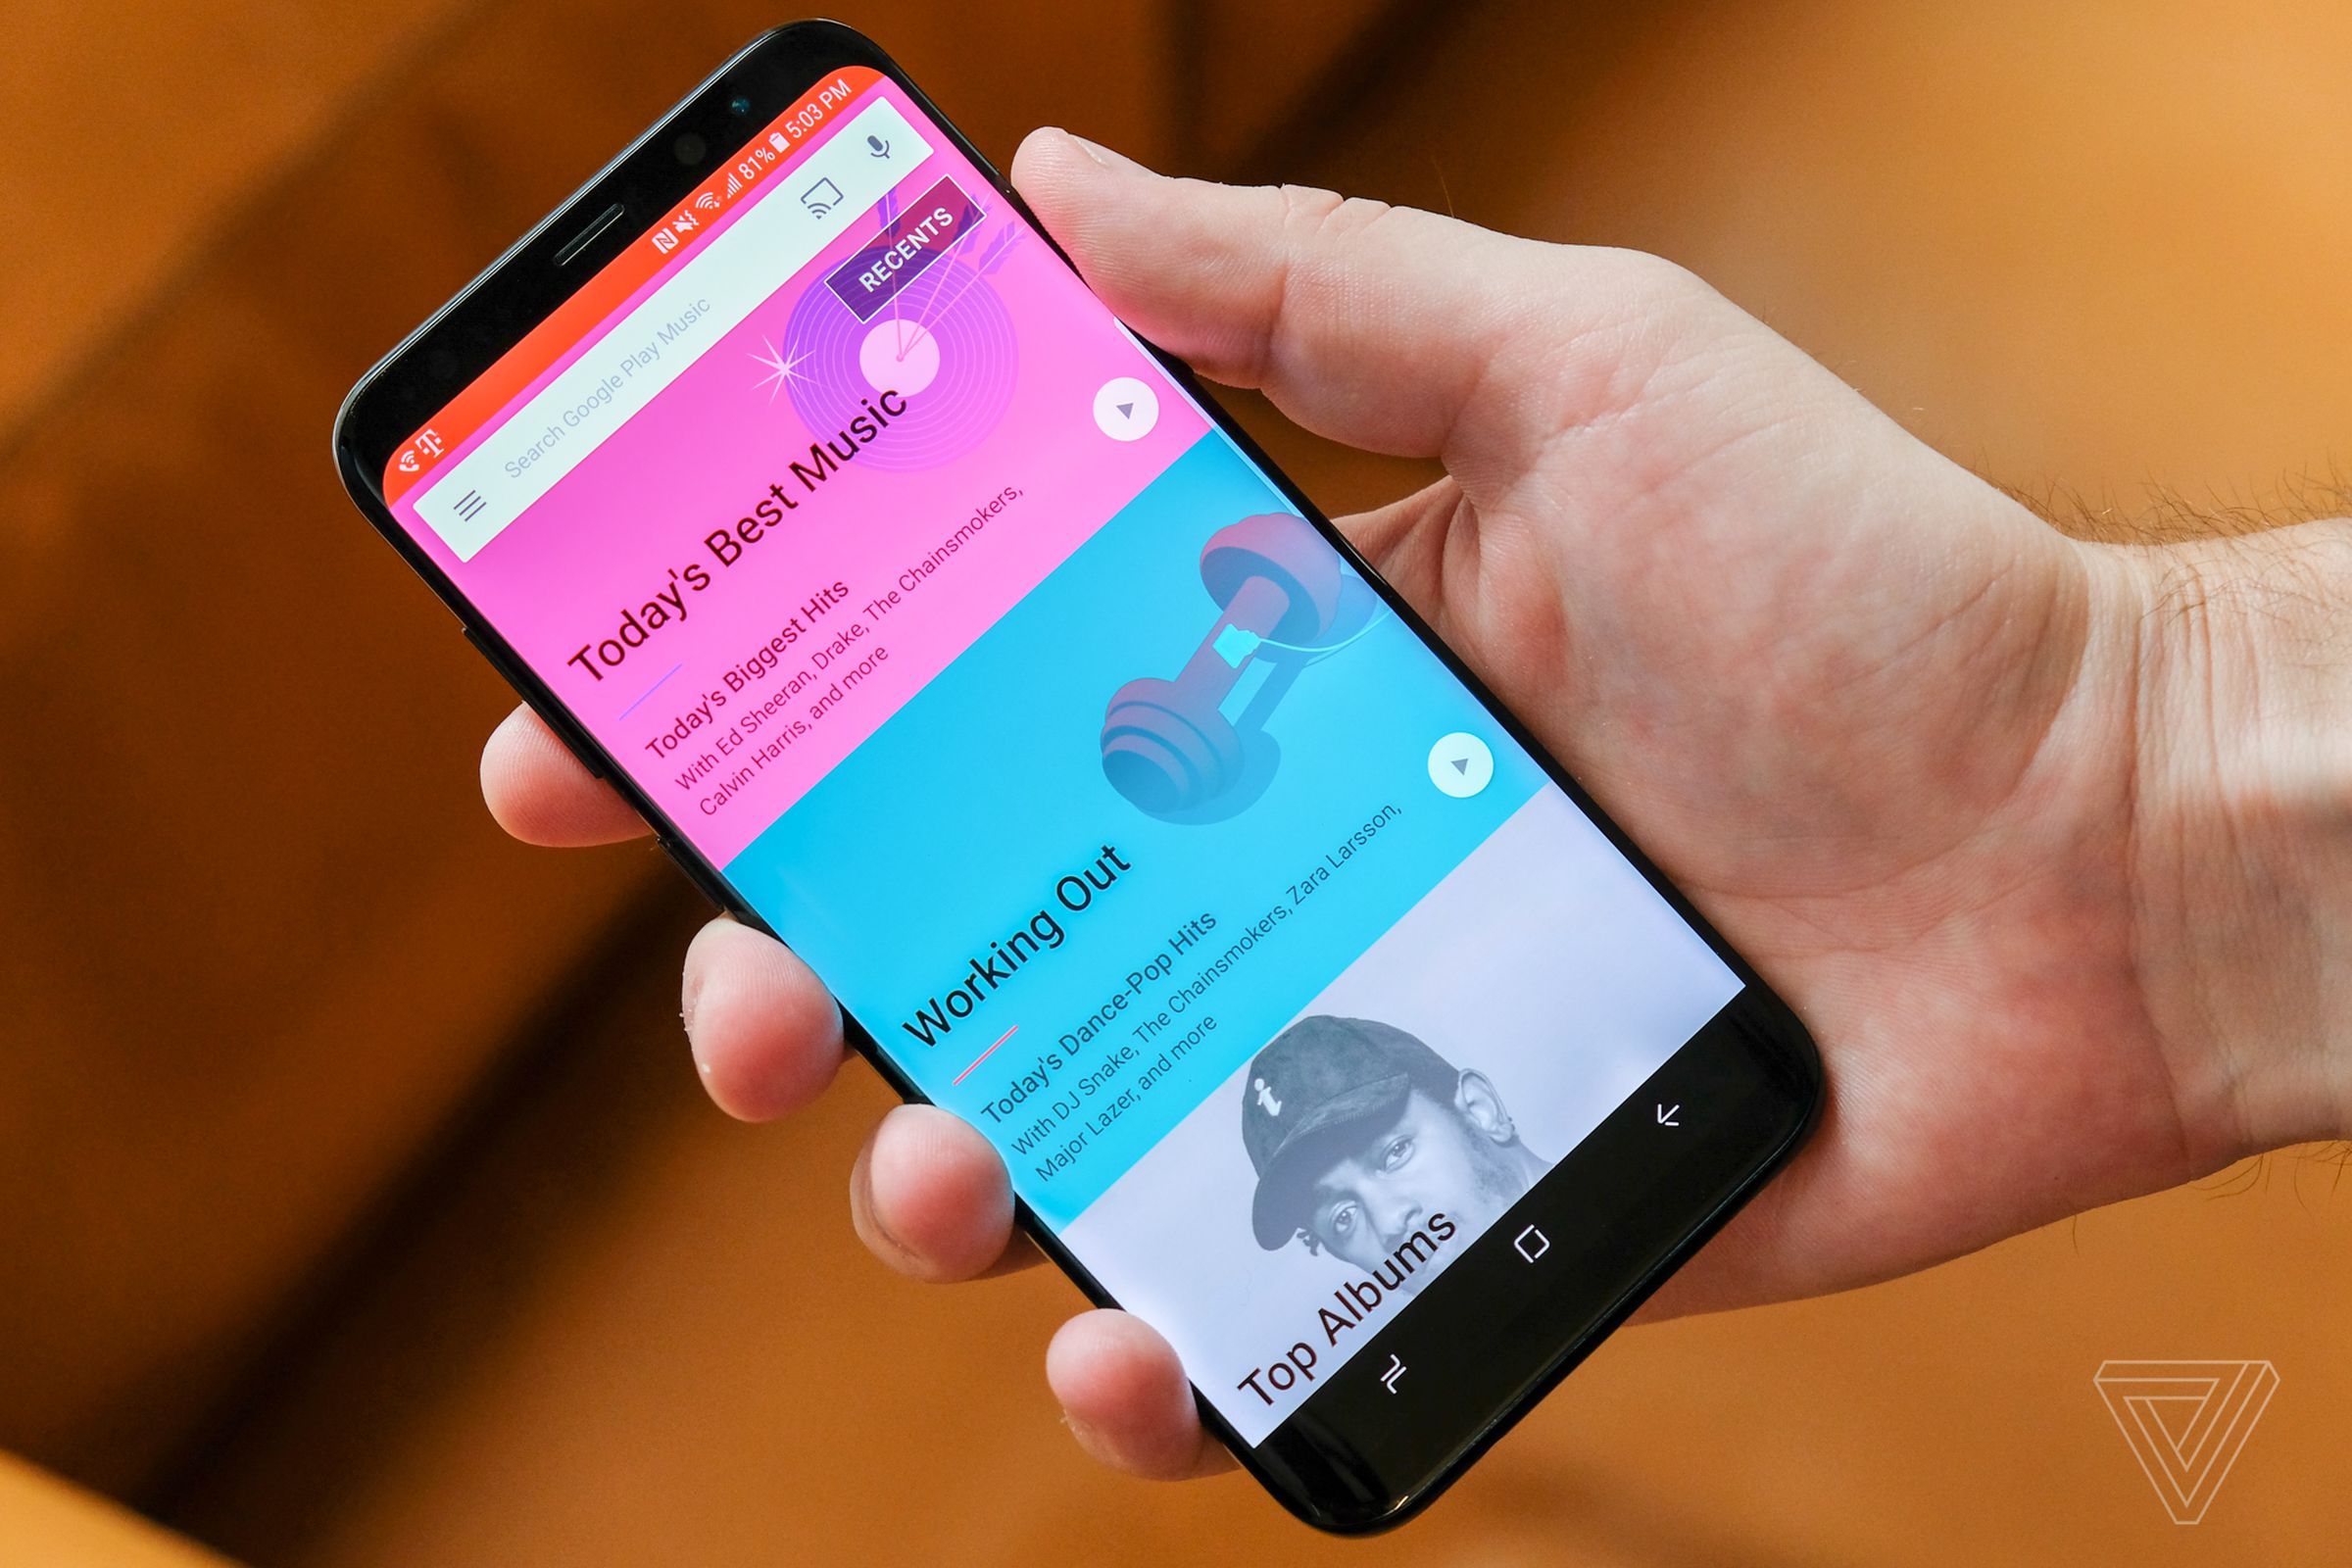 Google Play Music on Samsung’s Galaxy S8 smartphone